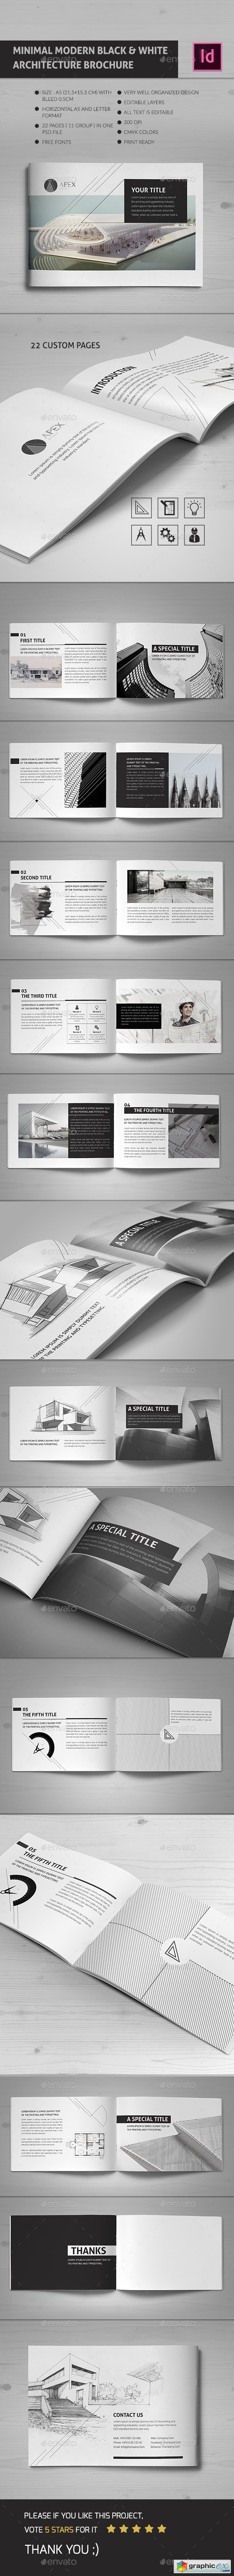 Minimal Modern Black & White Architecture Brochure Indd v